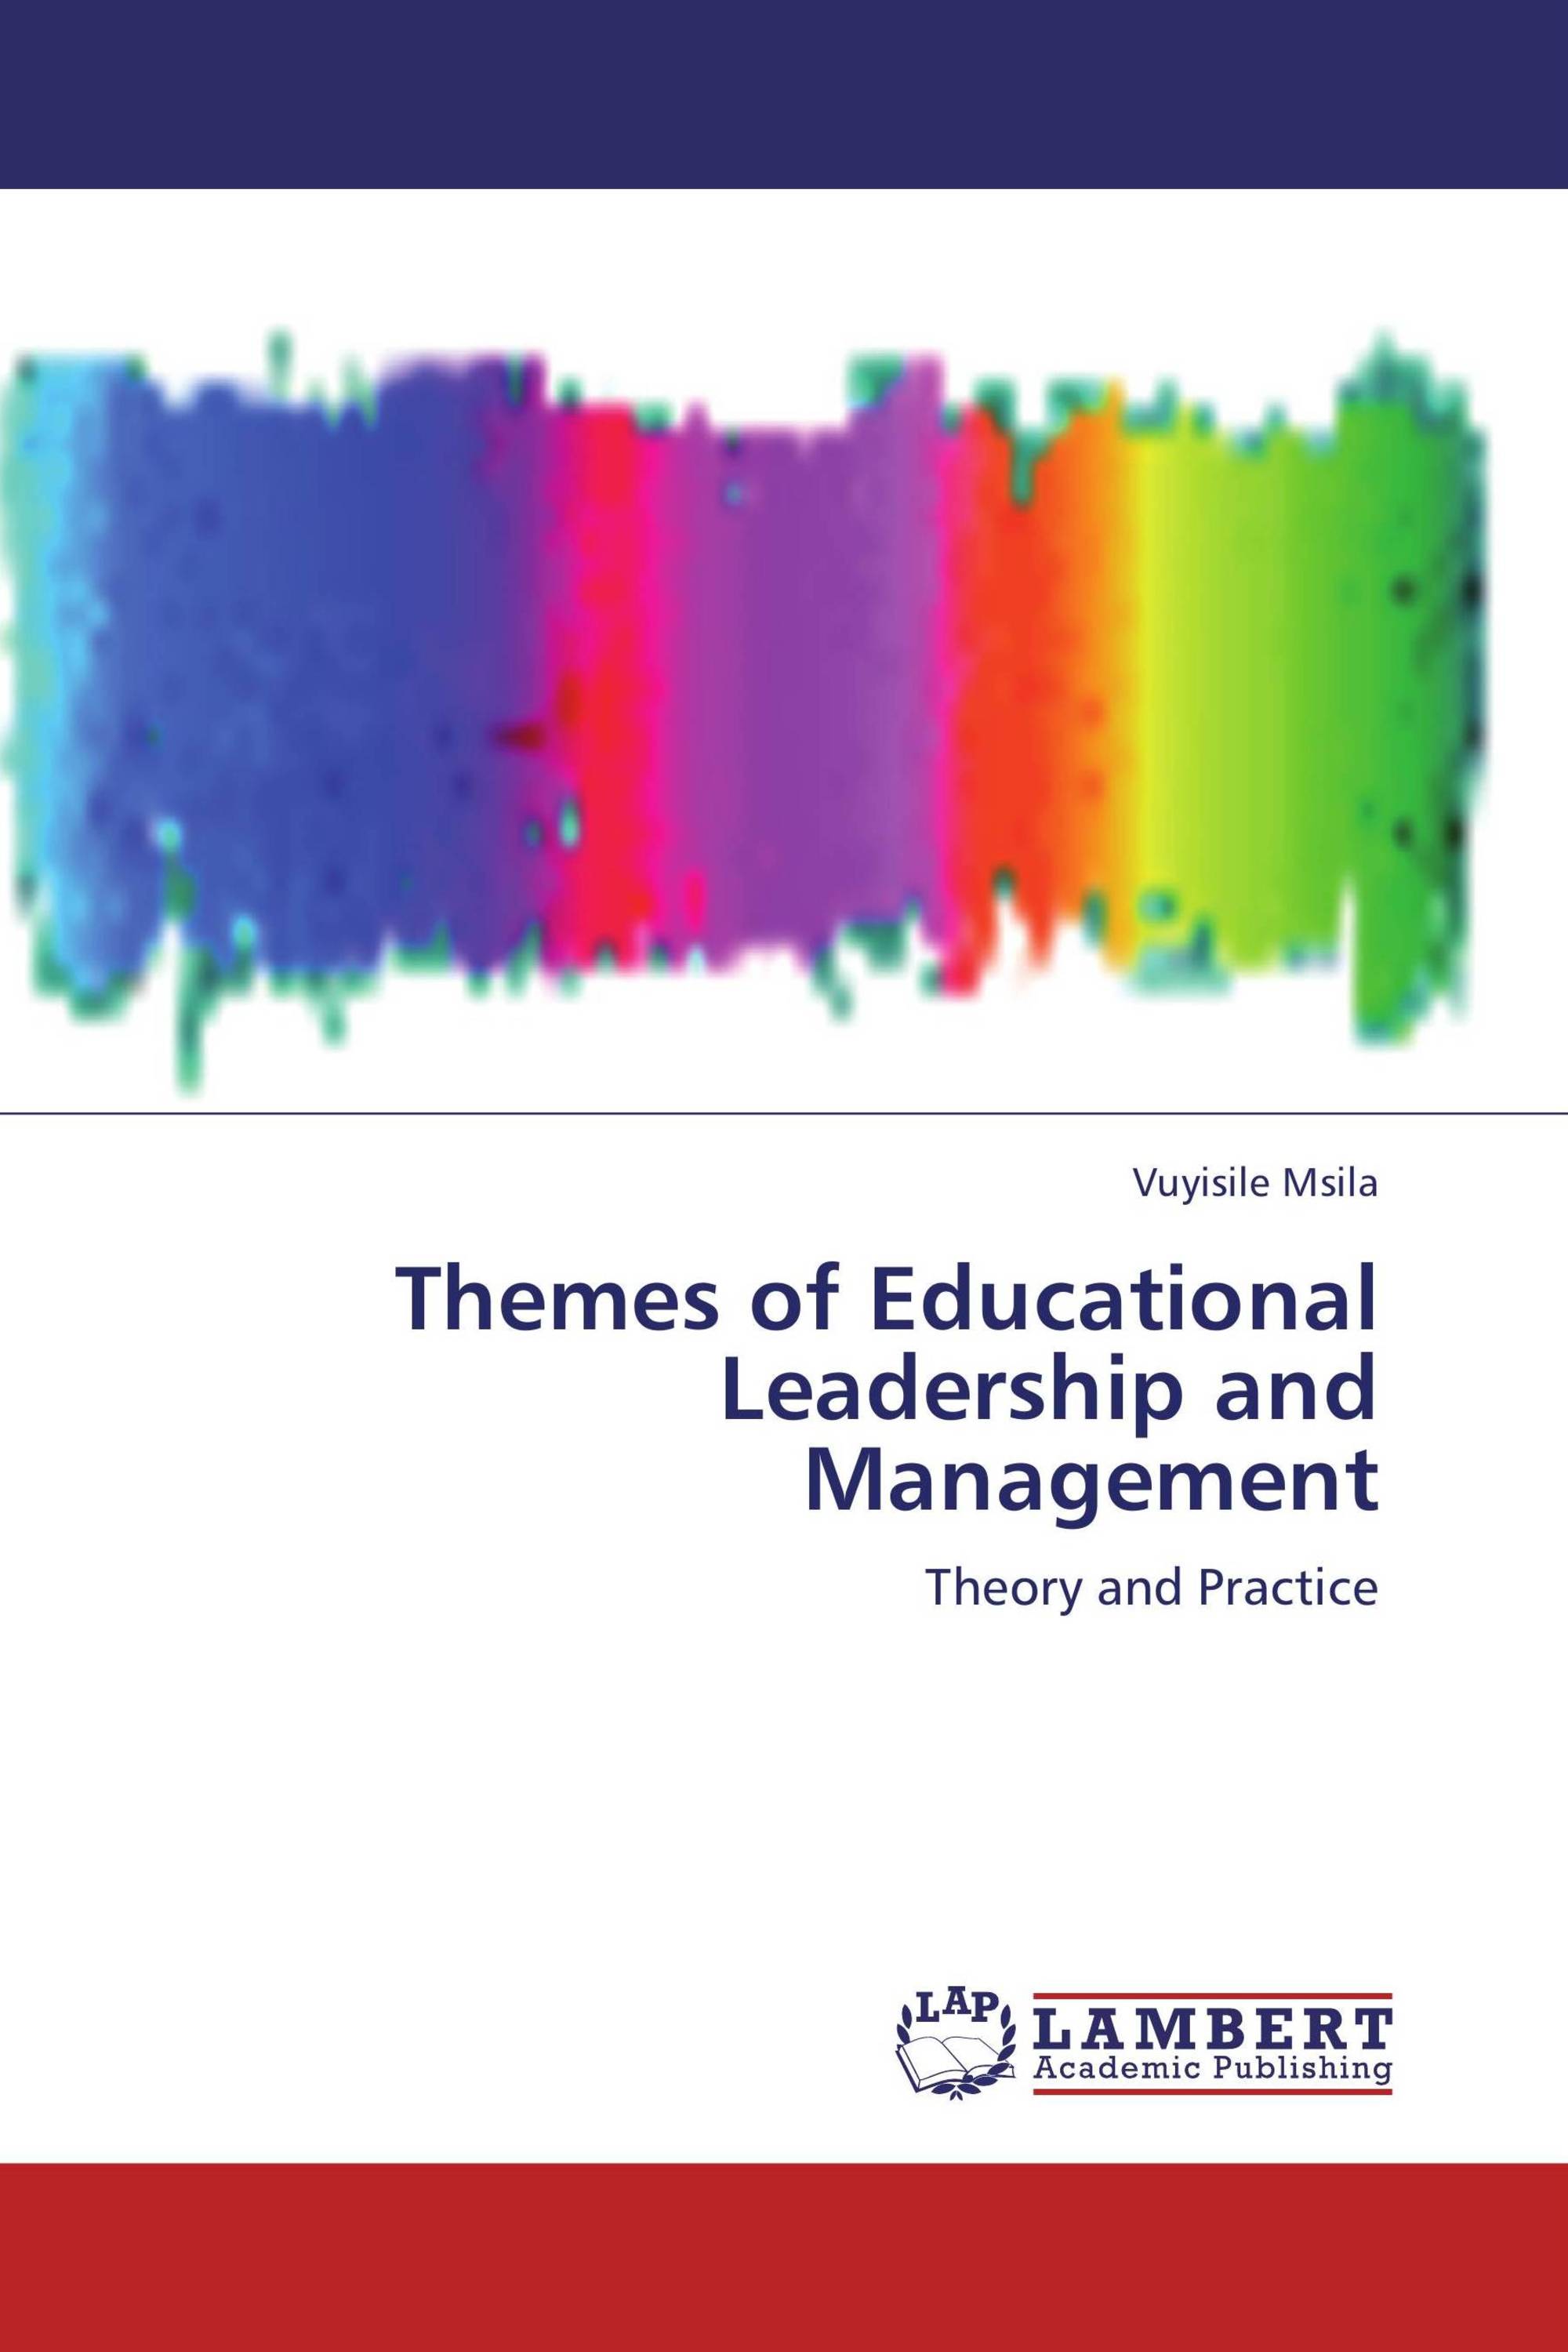 Dissertation on leadership in education